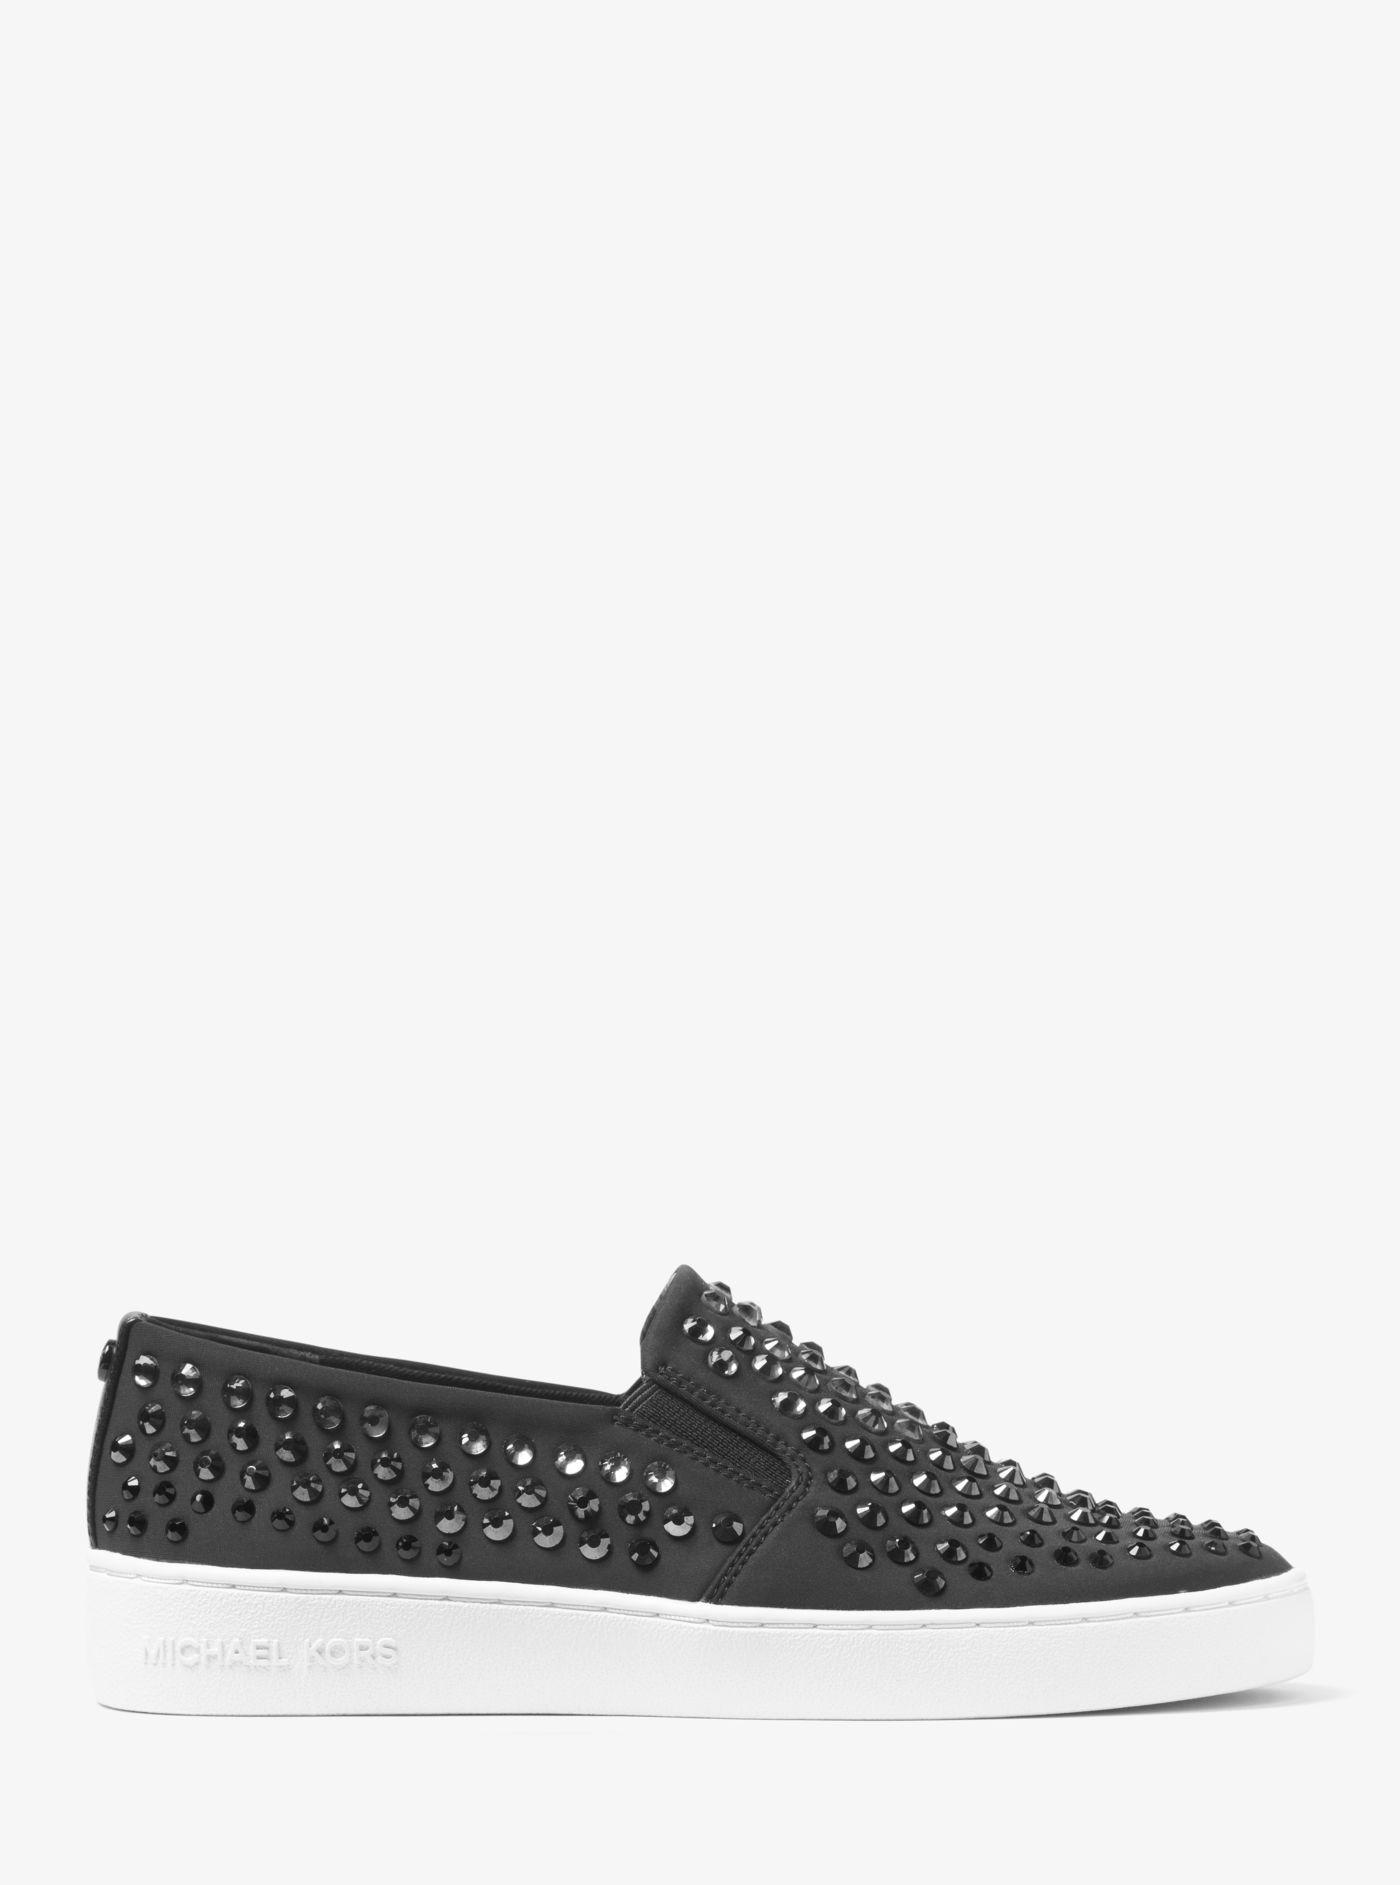 Michael Kors Keaton Stud-embellished Slip-on Sneaker in Black | Lyst